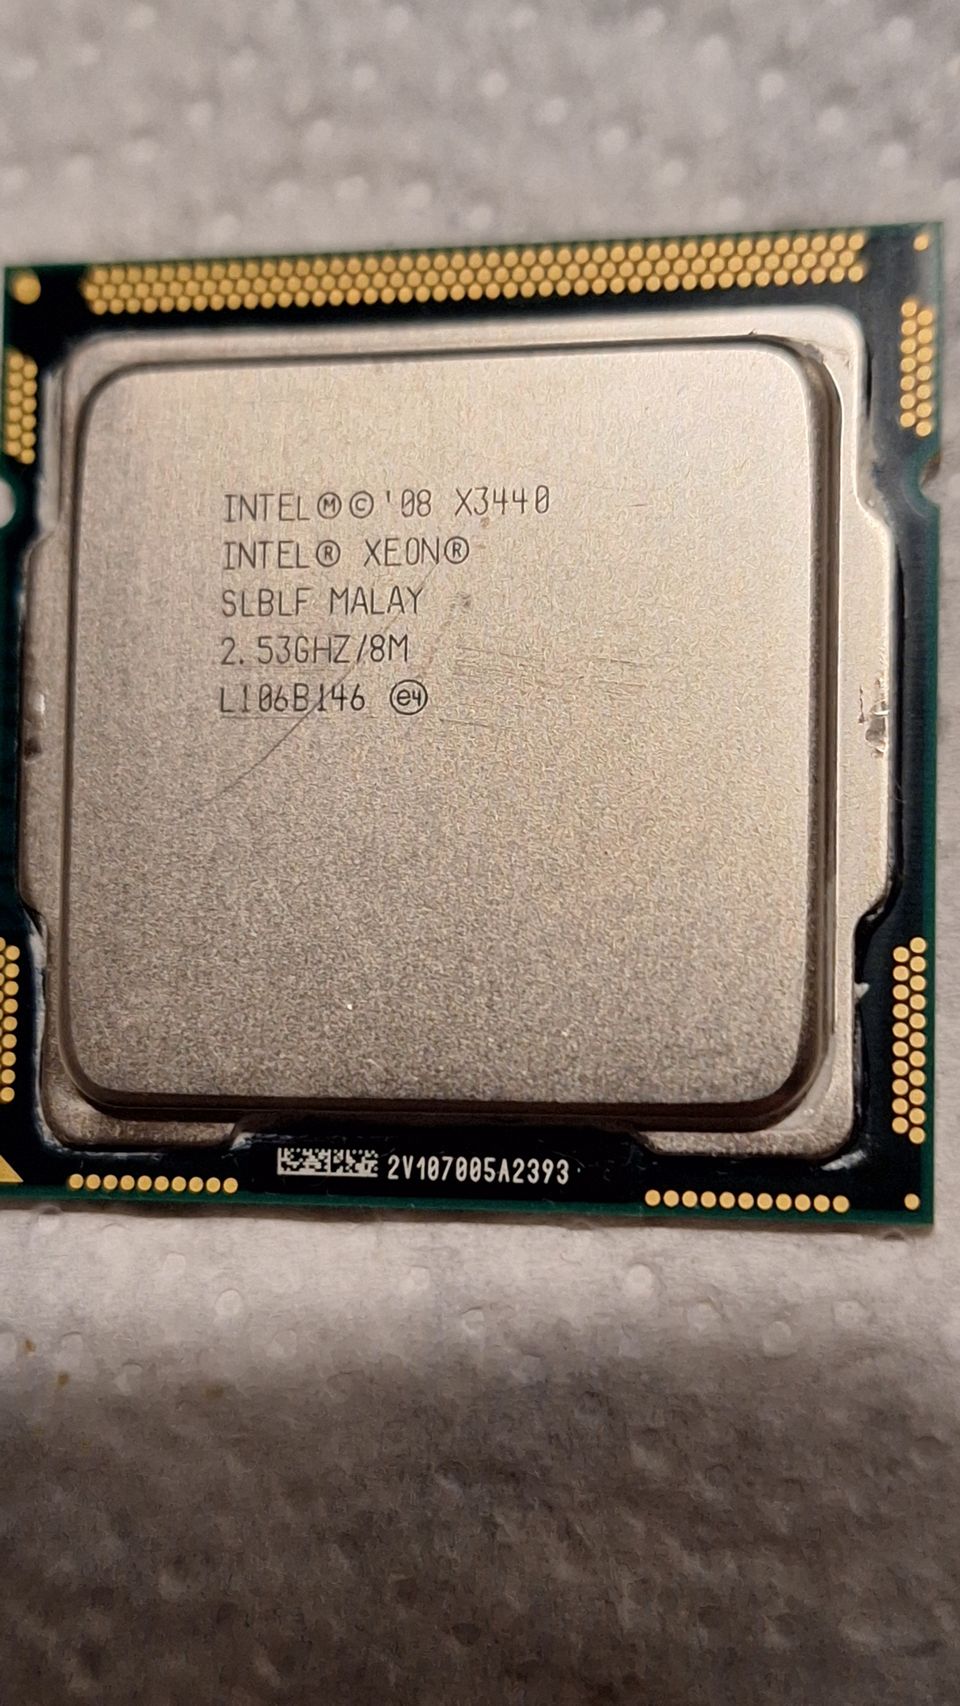 Intel Xeon X3440 Turbona vastaa i7-870 2.93ghz LGA1156